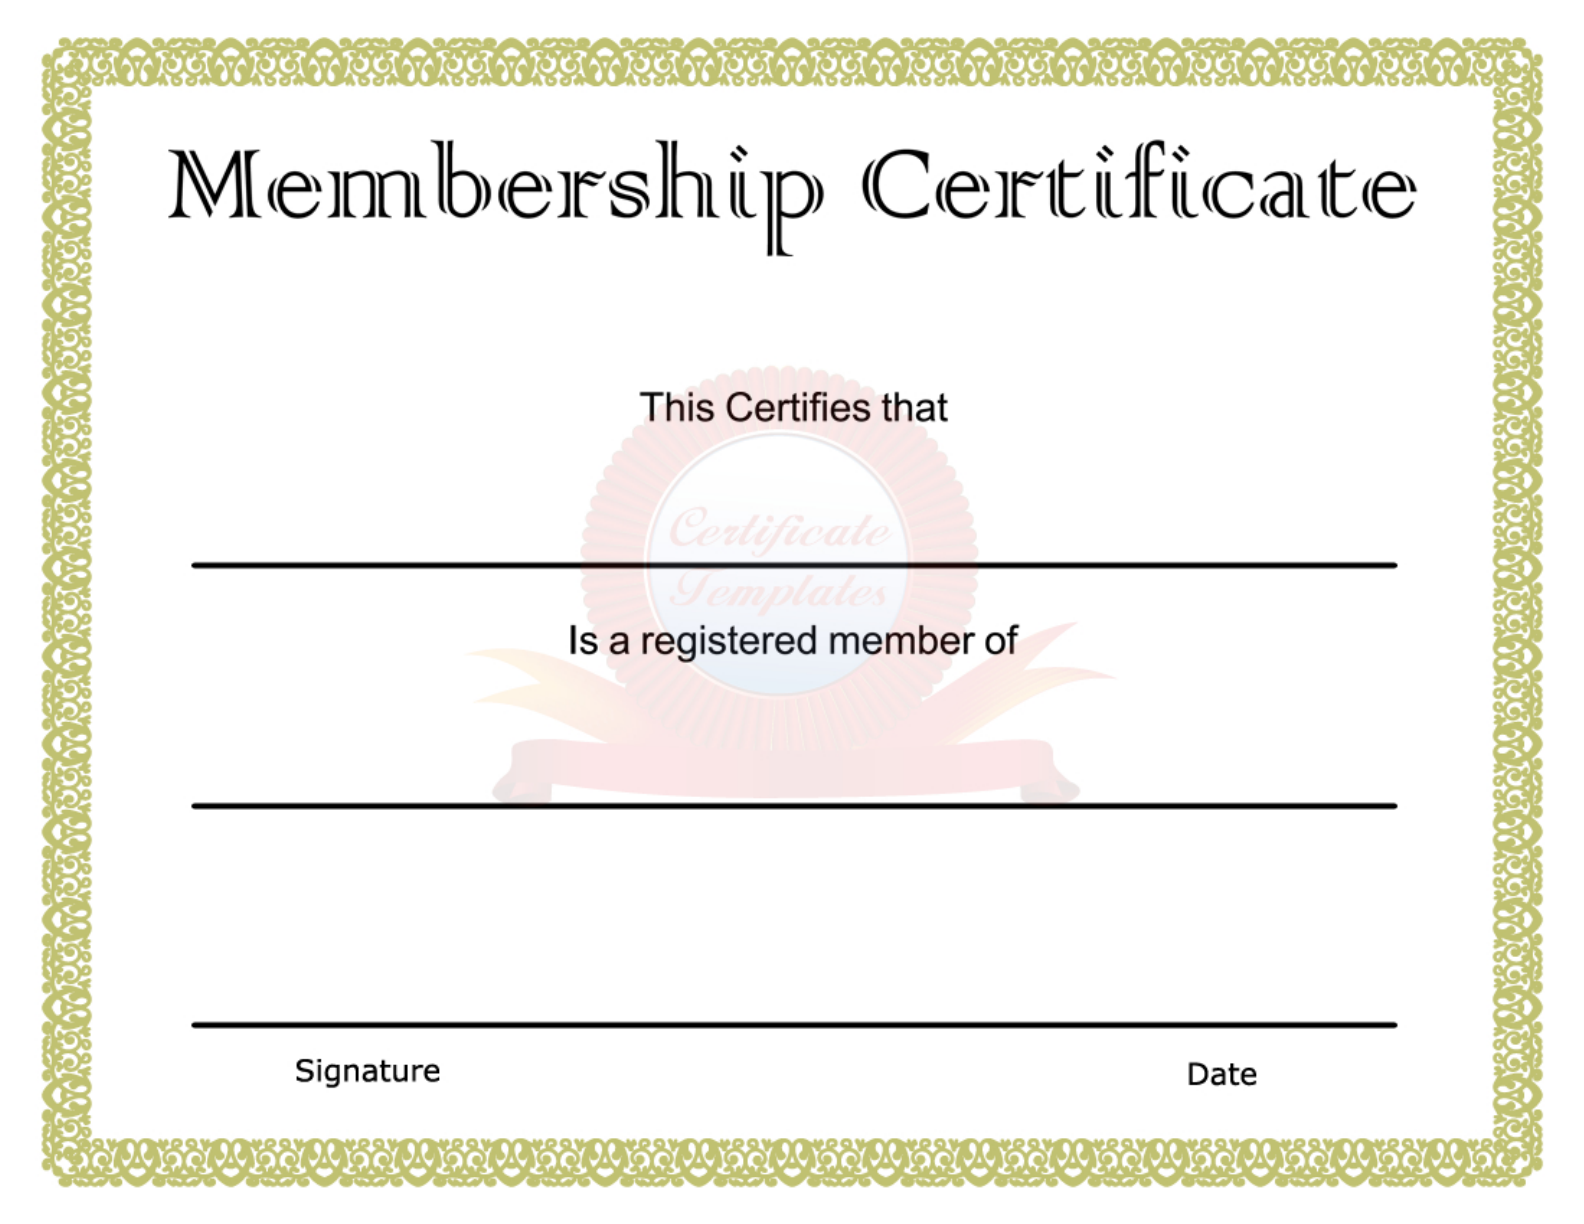 Free Membership Certificate - PDF | 484KB | 1 Page(s)